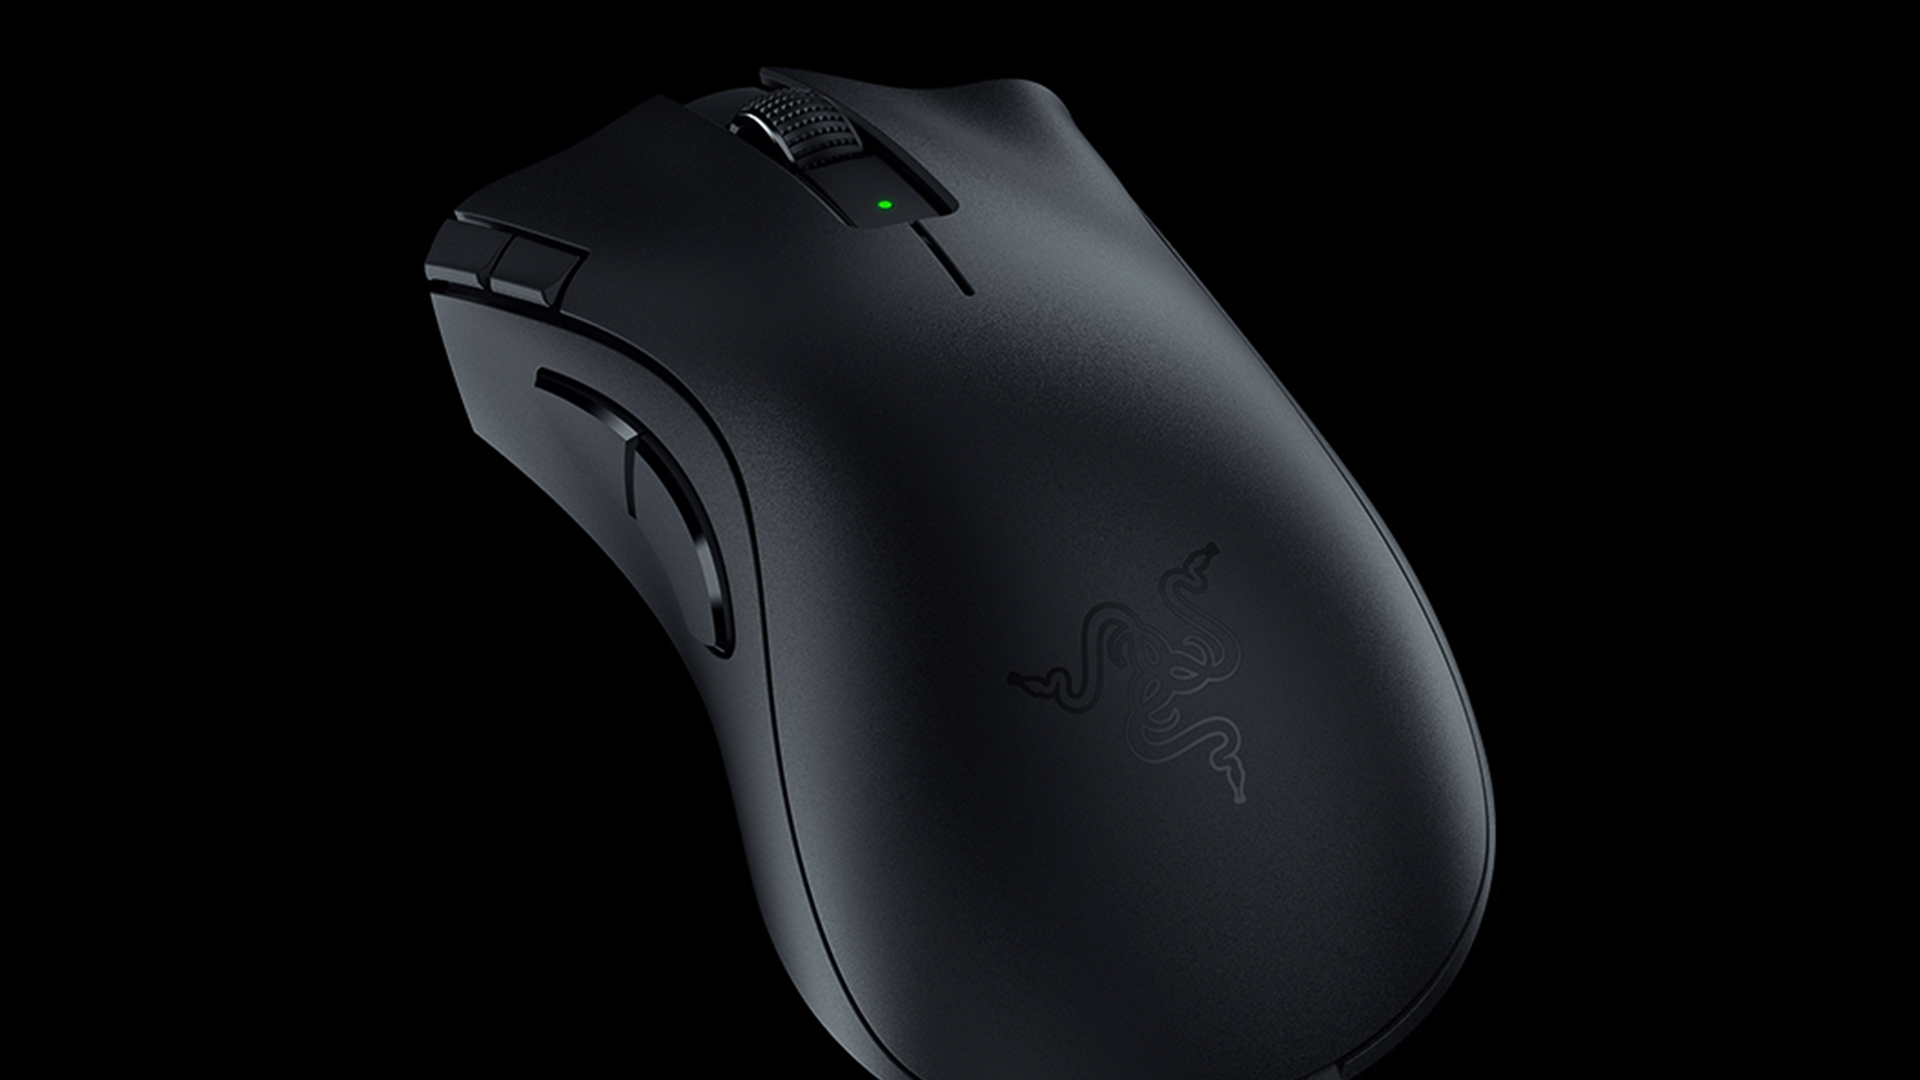 The RAZER DEATHADDER V2 X HYPERSPEED mouse on a black background.